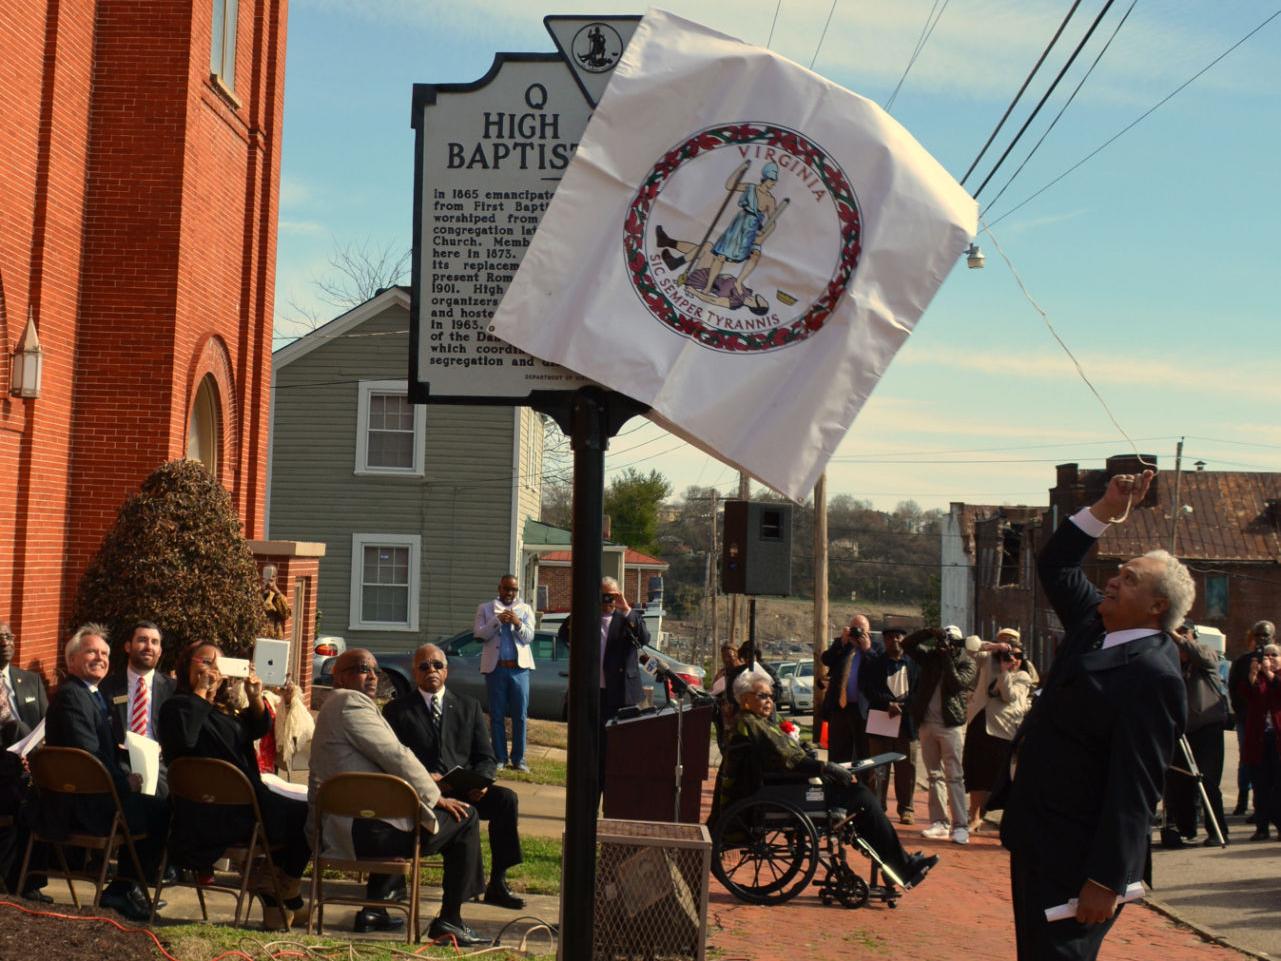 After 150 Years, High Street Baptist Church Earns Historical Marker | Local News | Godanriver.com